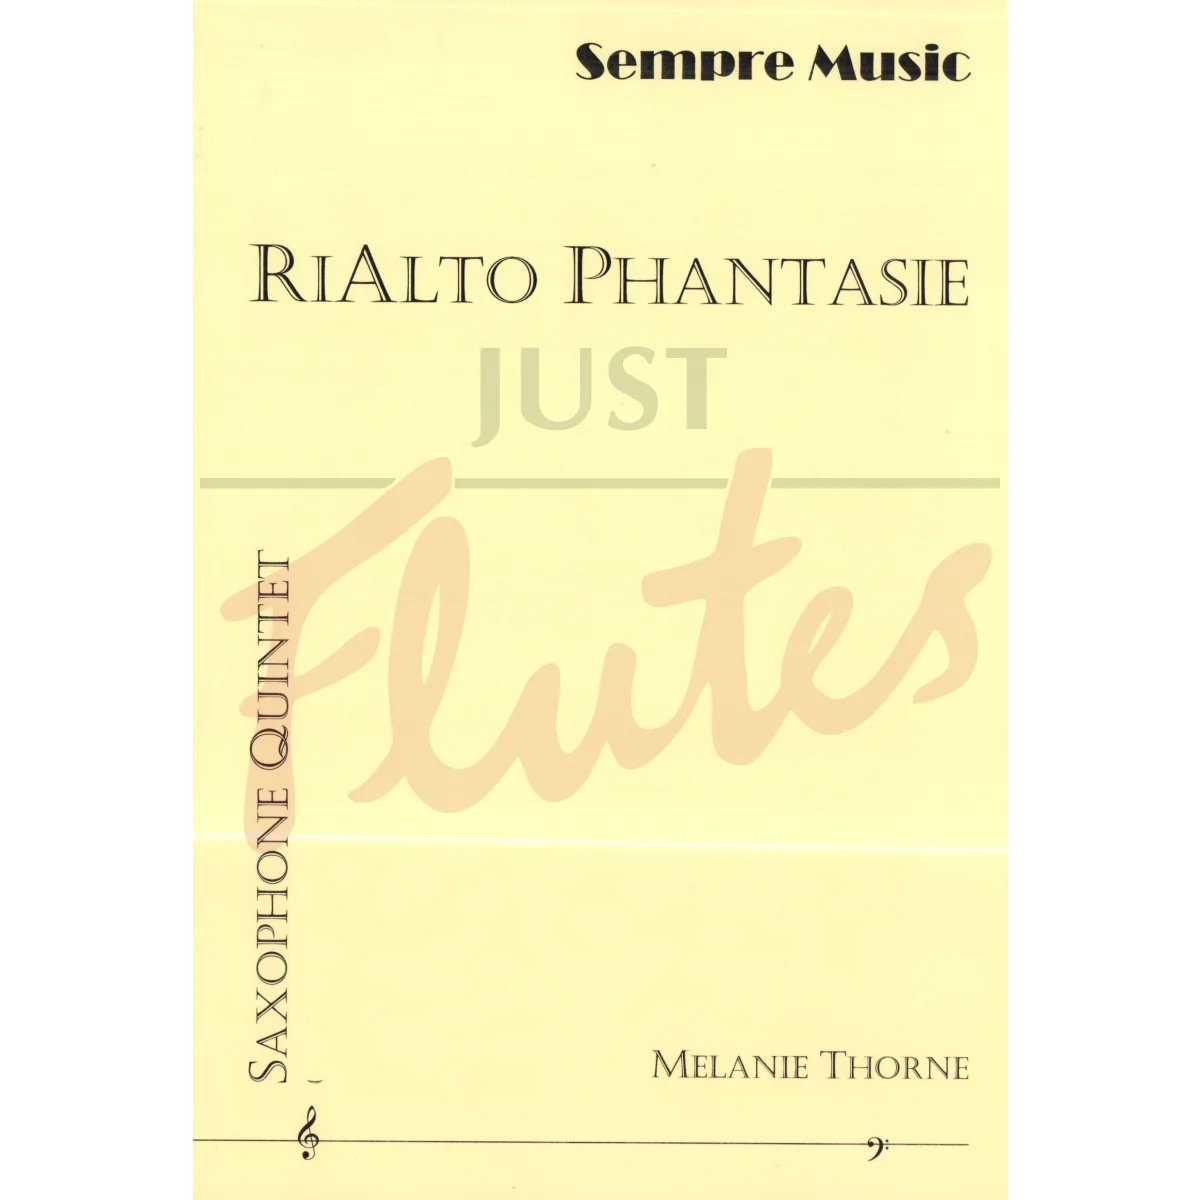 RiAlto Phantasie for Saxophone Quintet